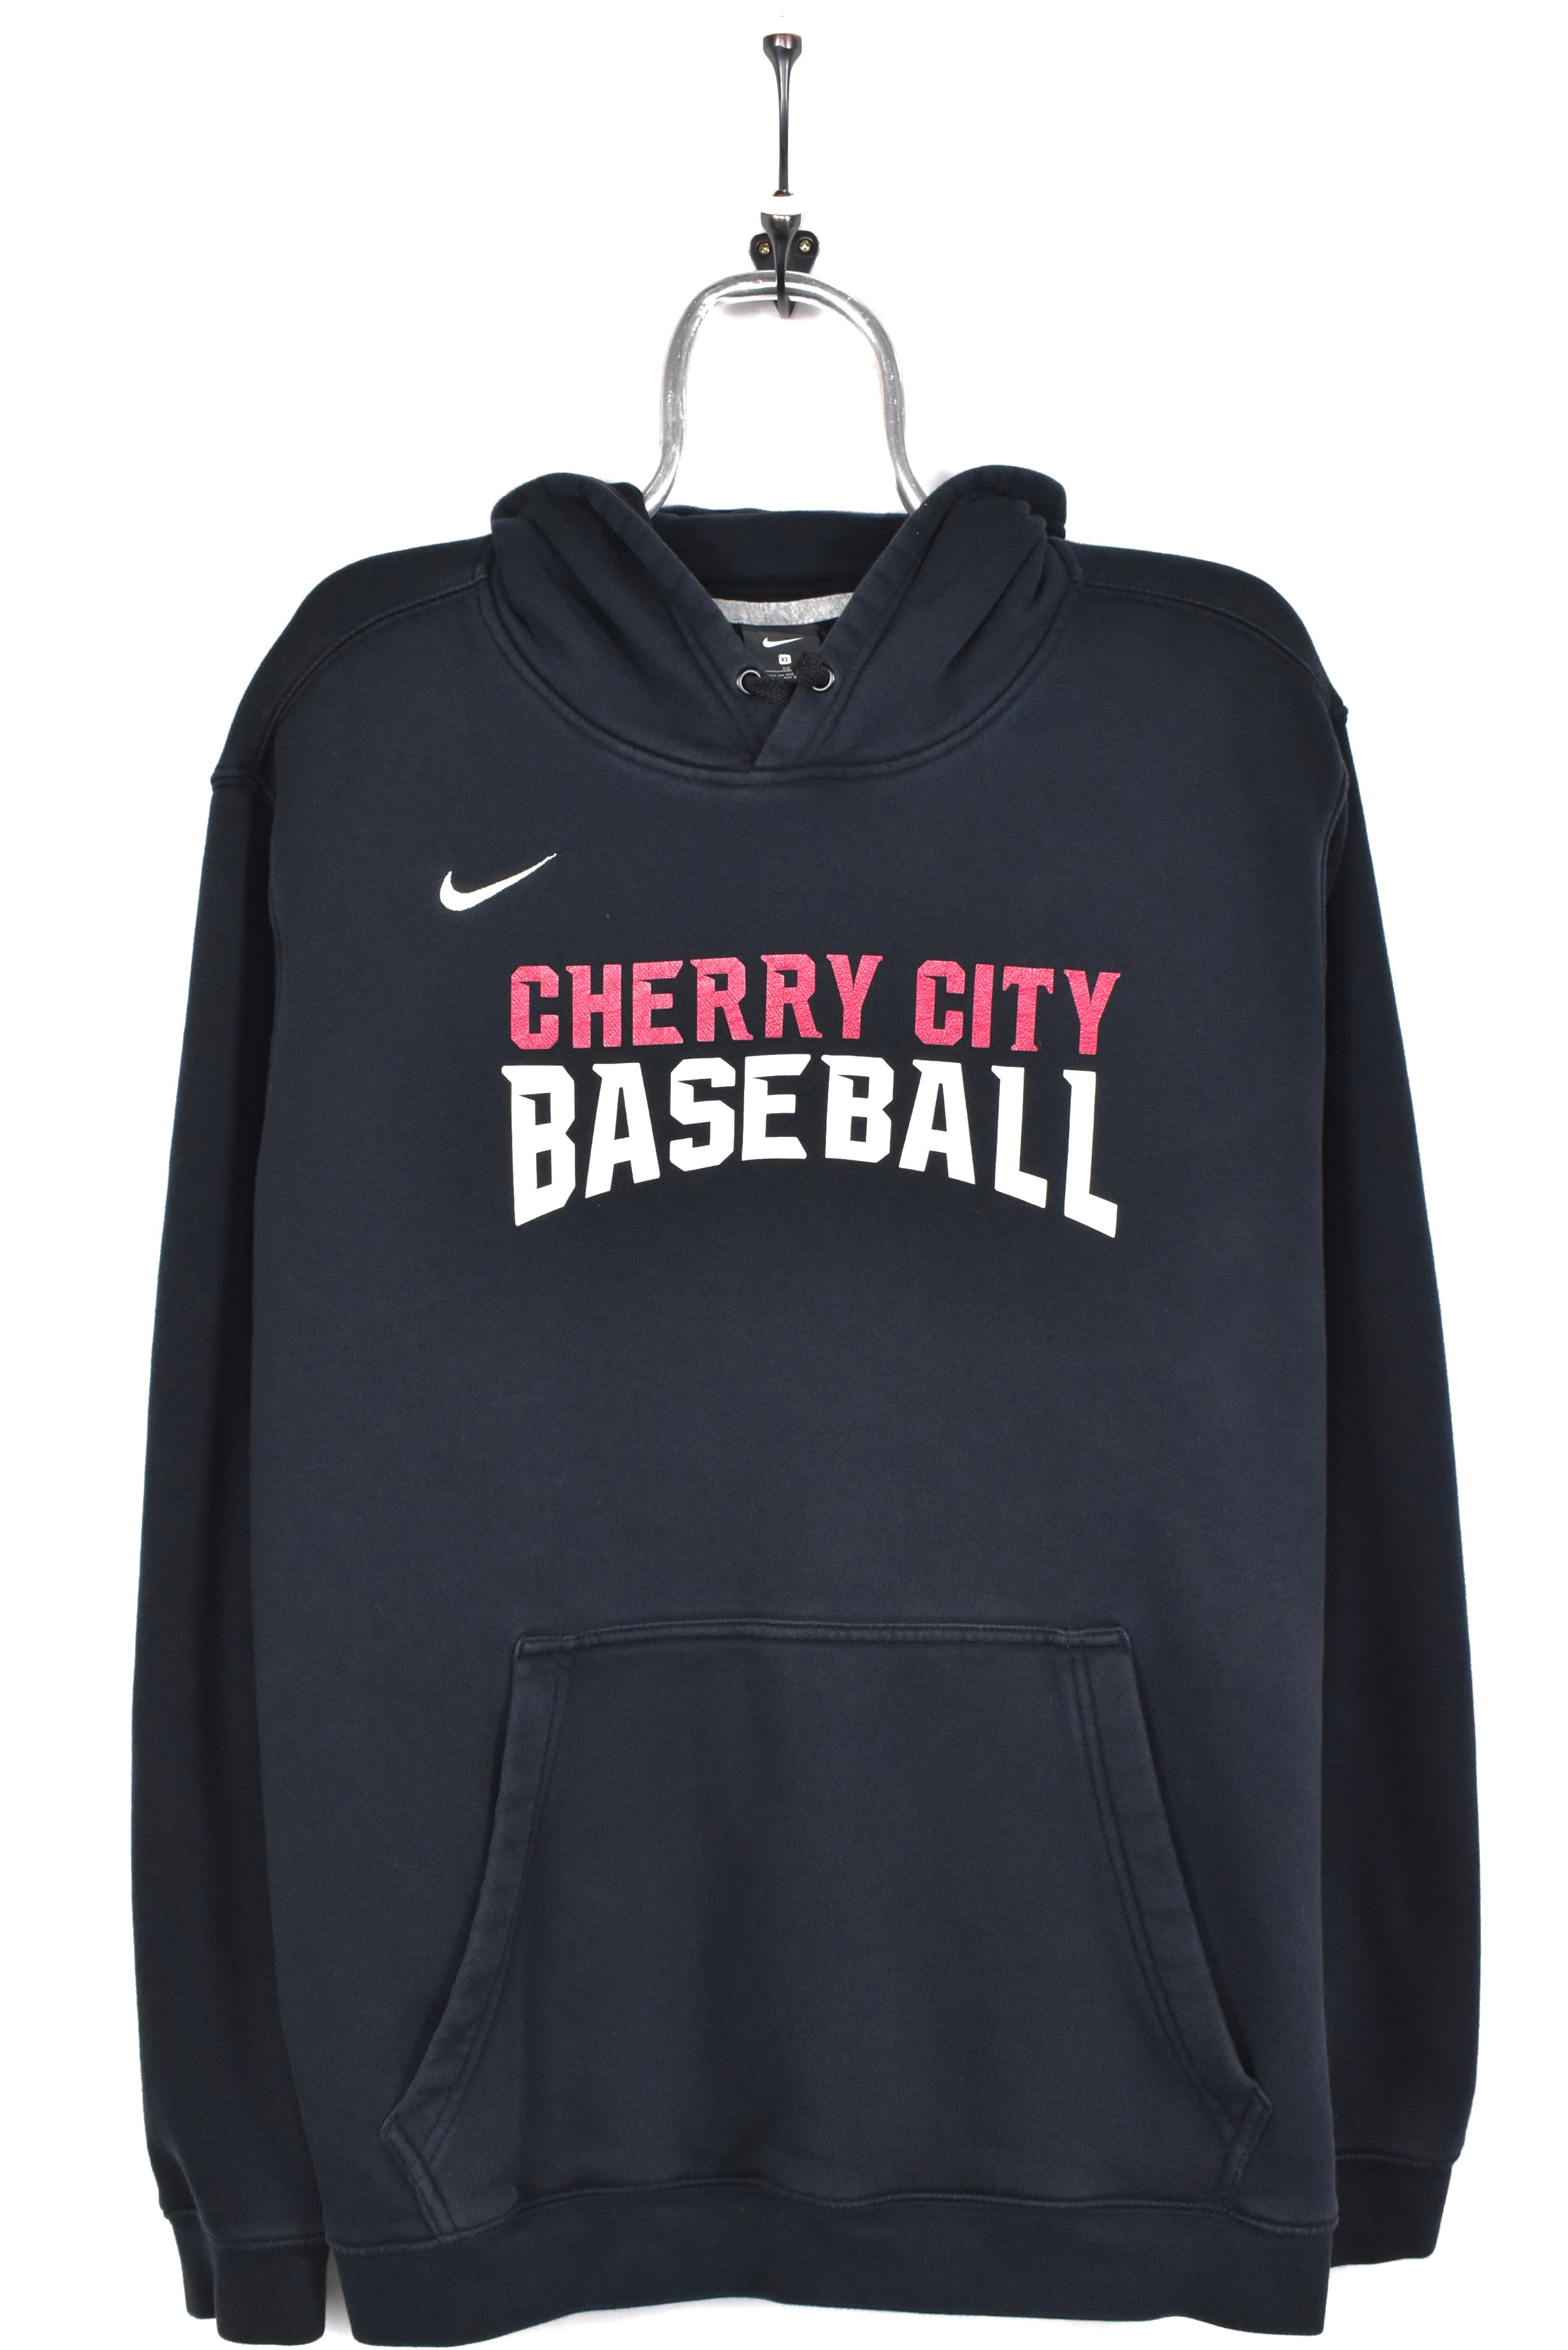 Vintage Cherry City hoodie, Black baseball graphic sweatshirt - AU XL PRO SPORT